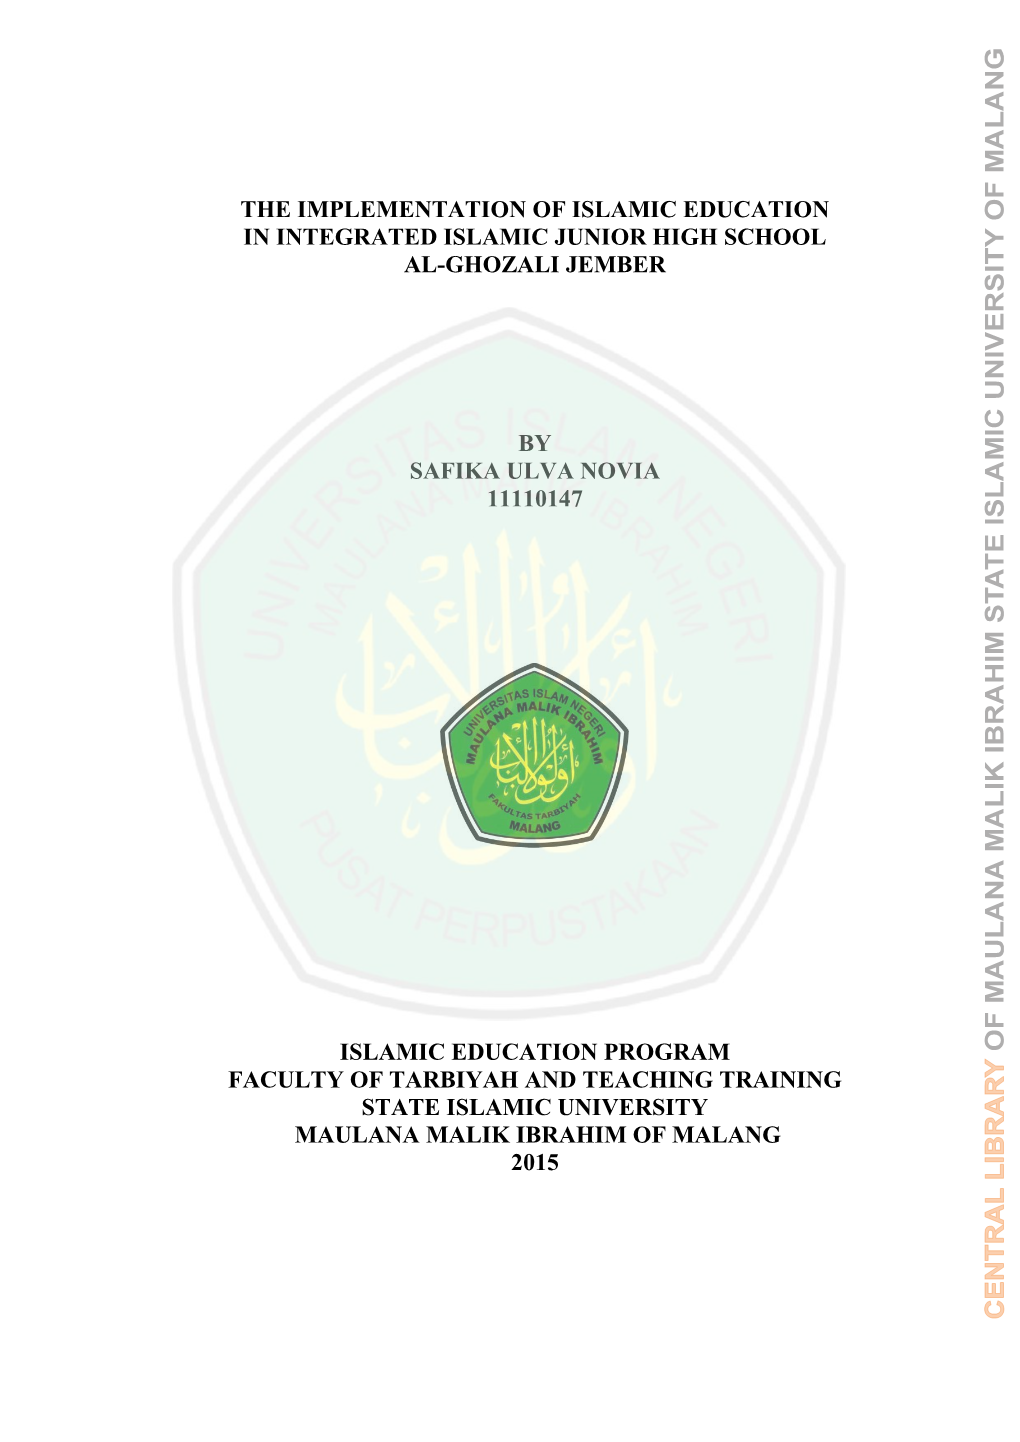 The Implementation of Islamic Education in Integrated Islamic Junior High School Al-Ghozali Jember